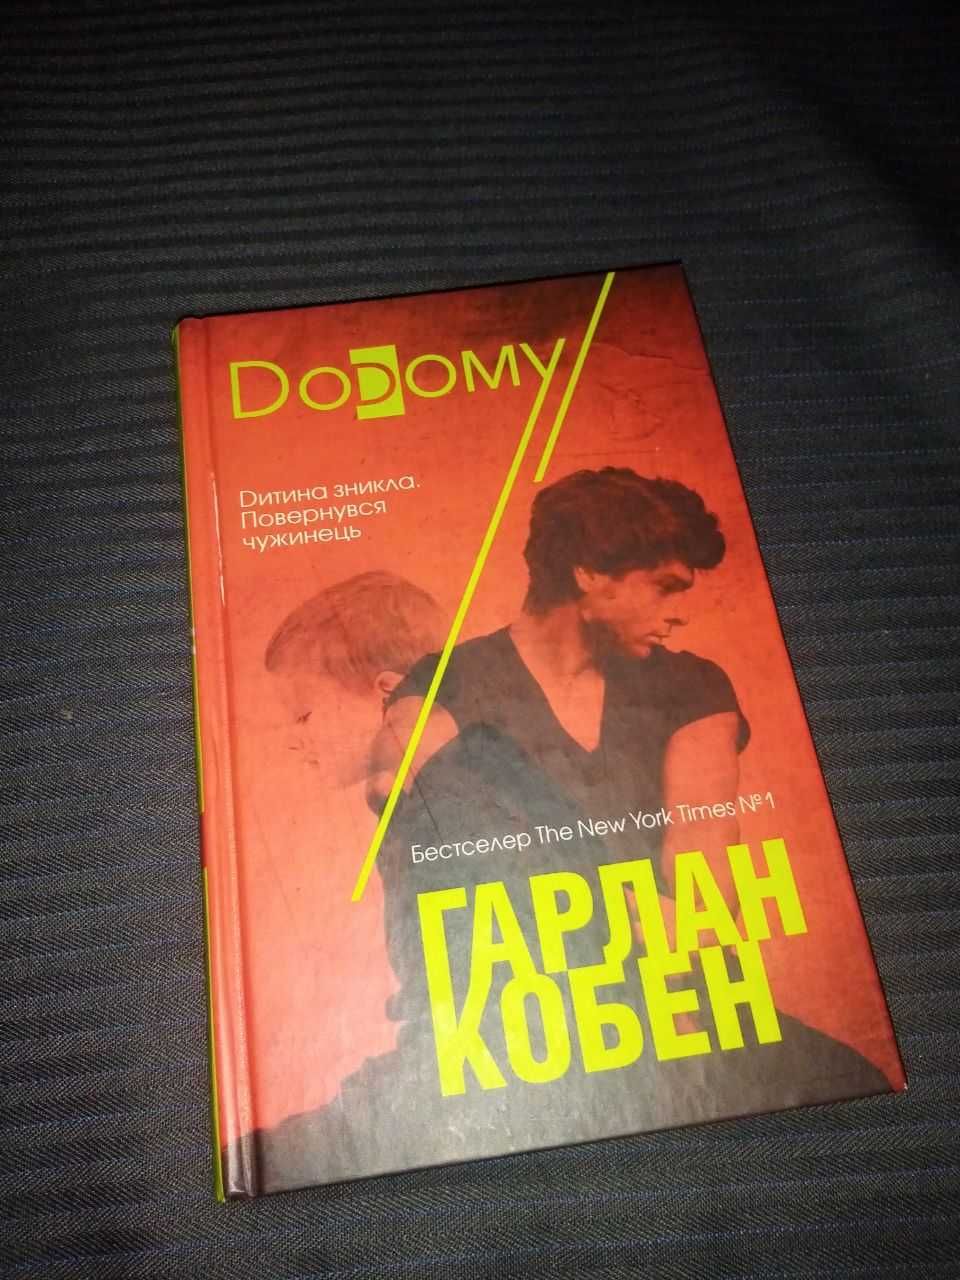 Книга "Додому" Герлан Кобан